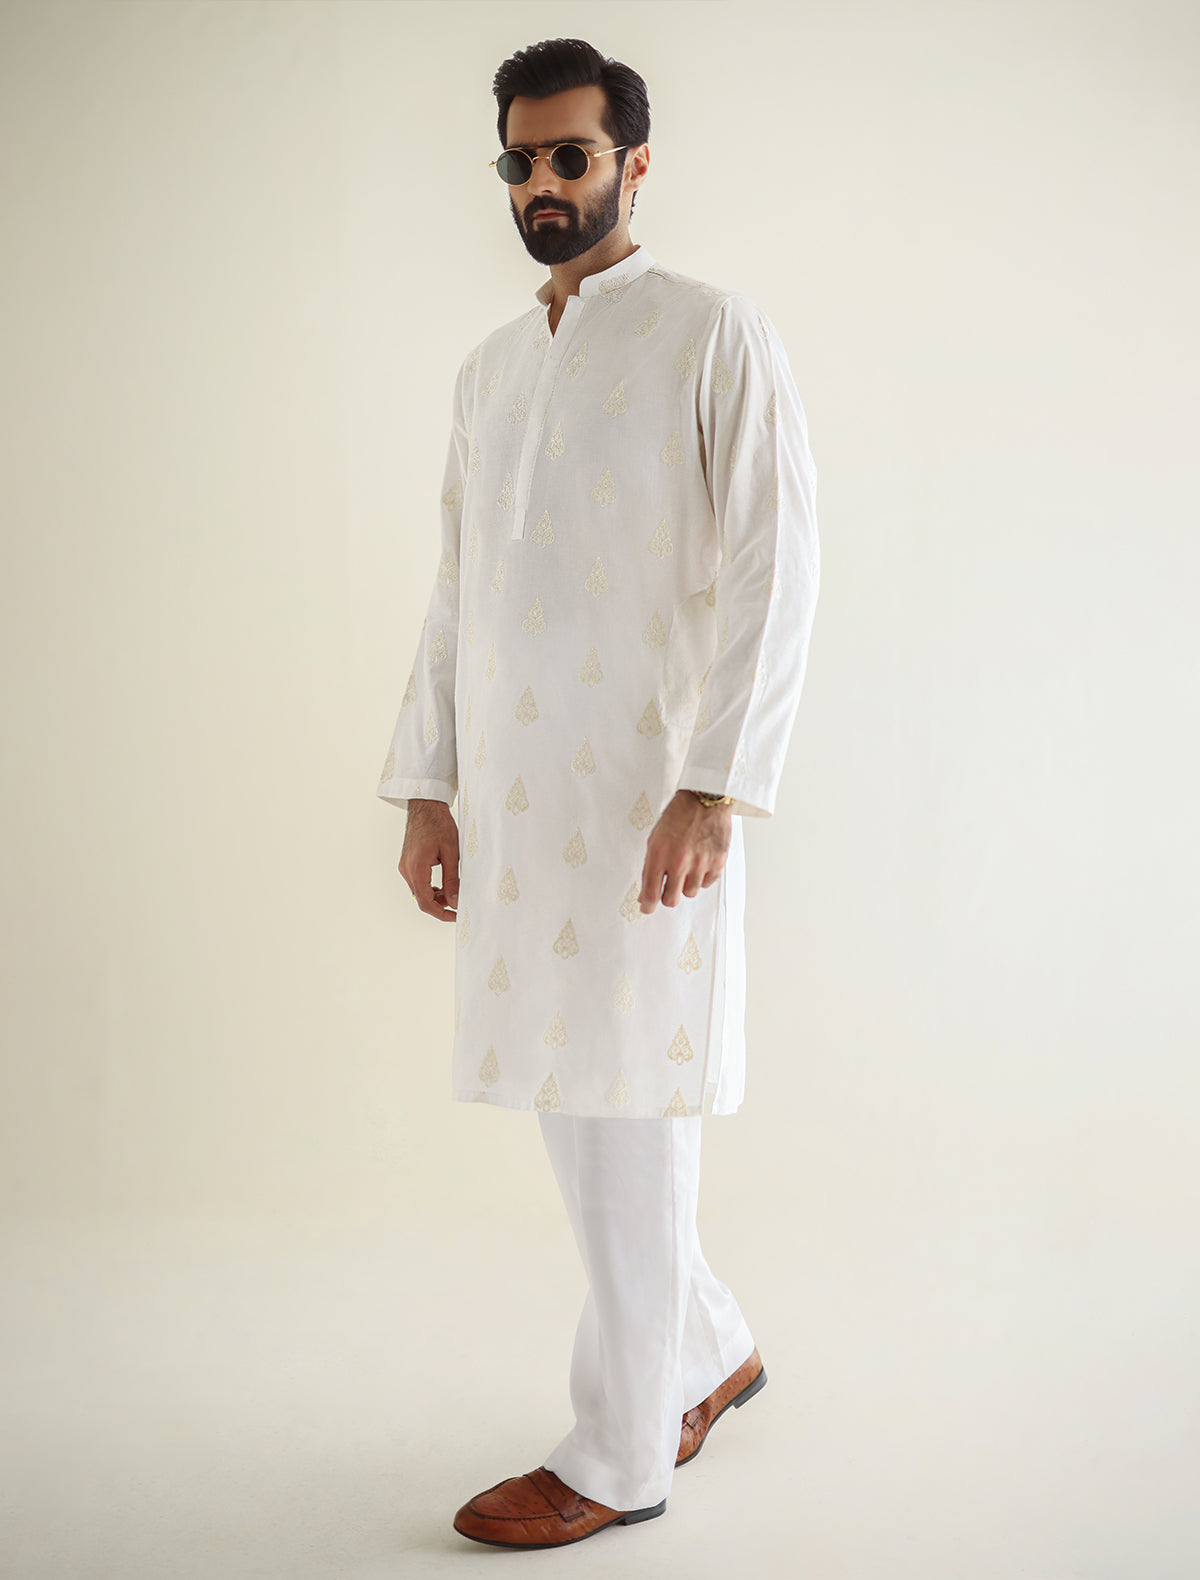 Pakistani Menswear | Ismail Farid - OFF-WHITE EMBROIDERED KURTA - Khanumjan  Pakistani Clothes and Designer Dresses in UK, USA 